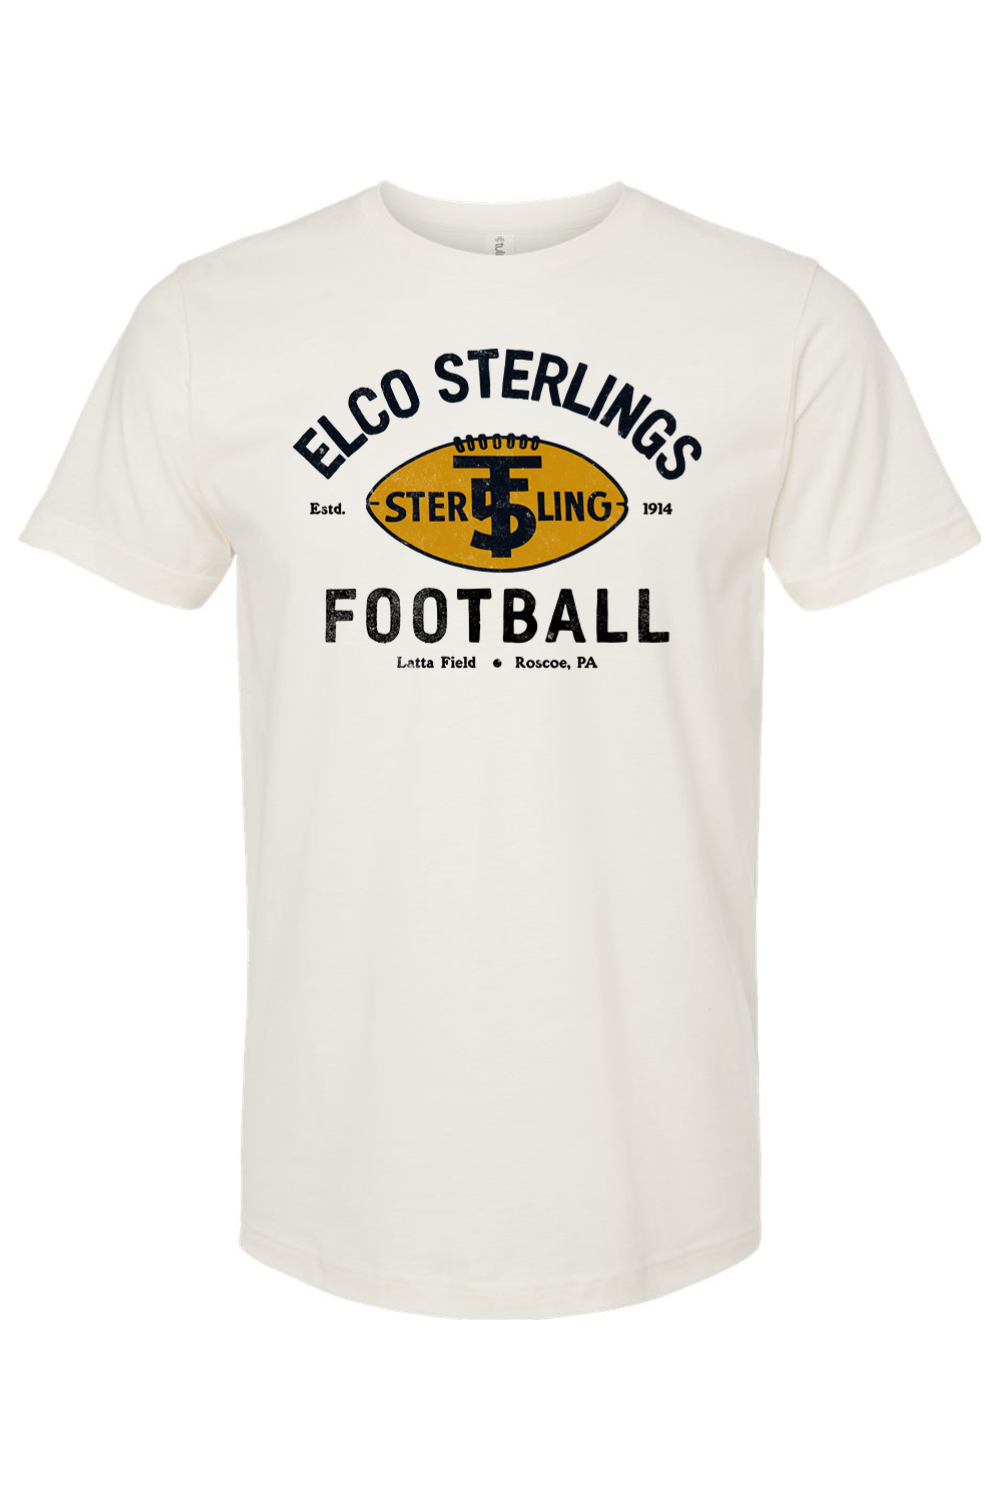 Elco Sterlings Football - 1914 - Yinzylvania